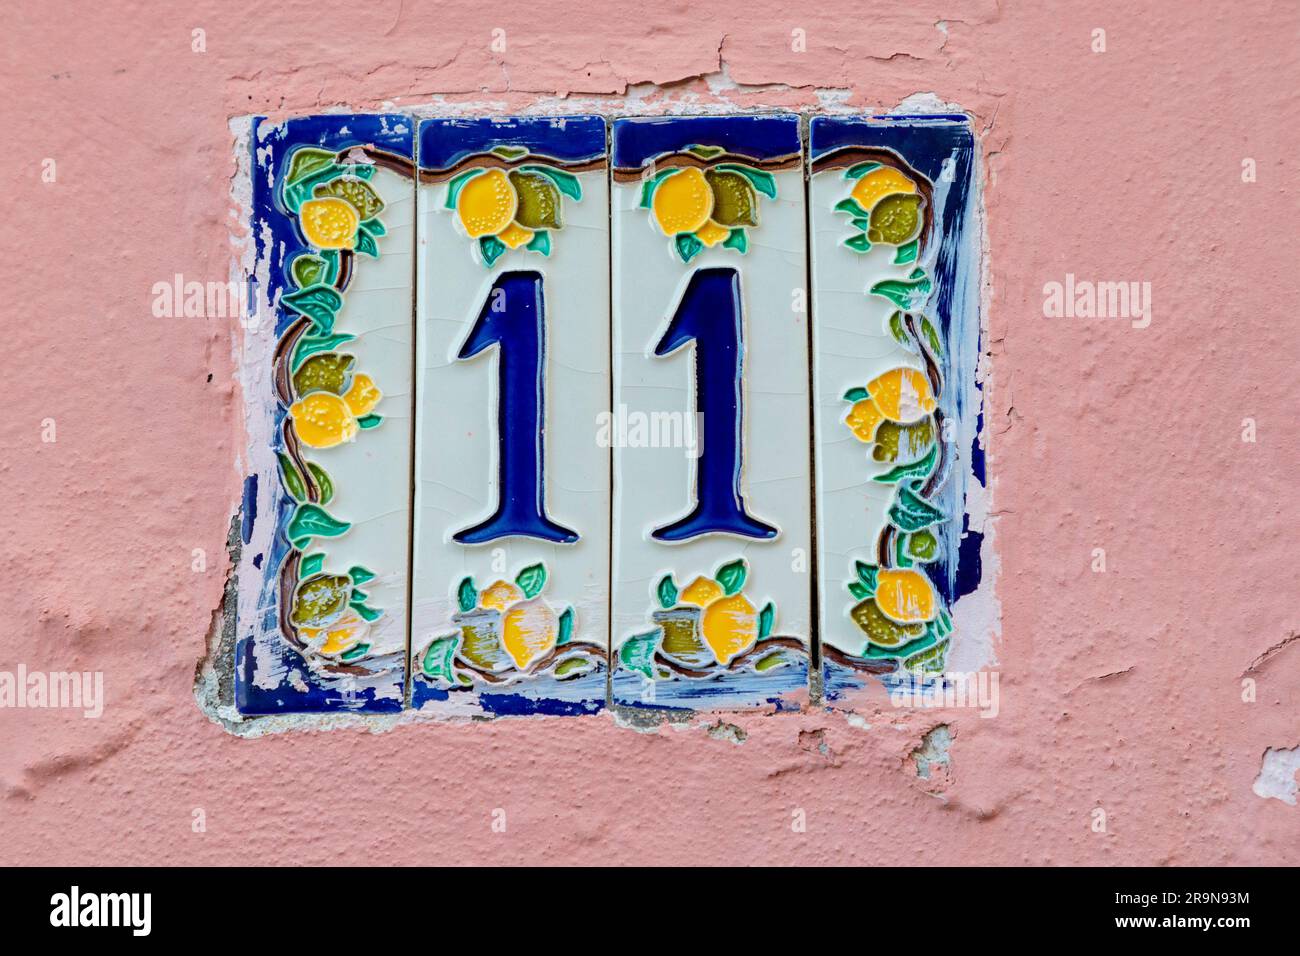 Número de casa, Procida, Campania, Italia, Sudoeste de Europa Foto de stock